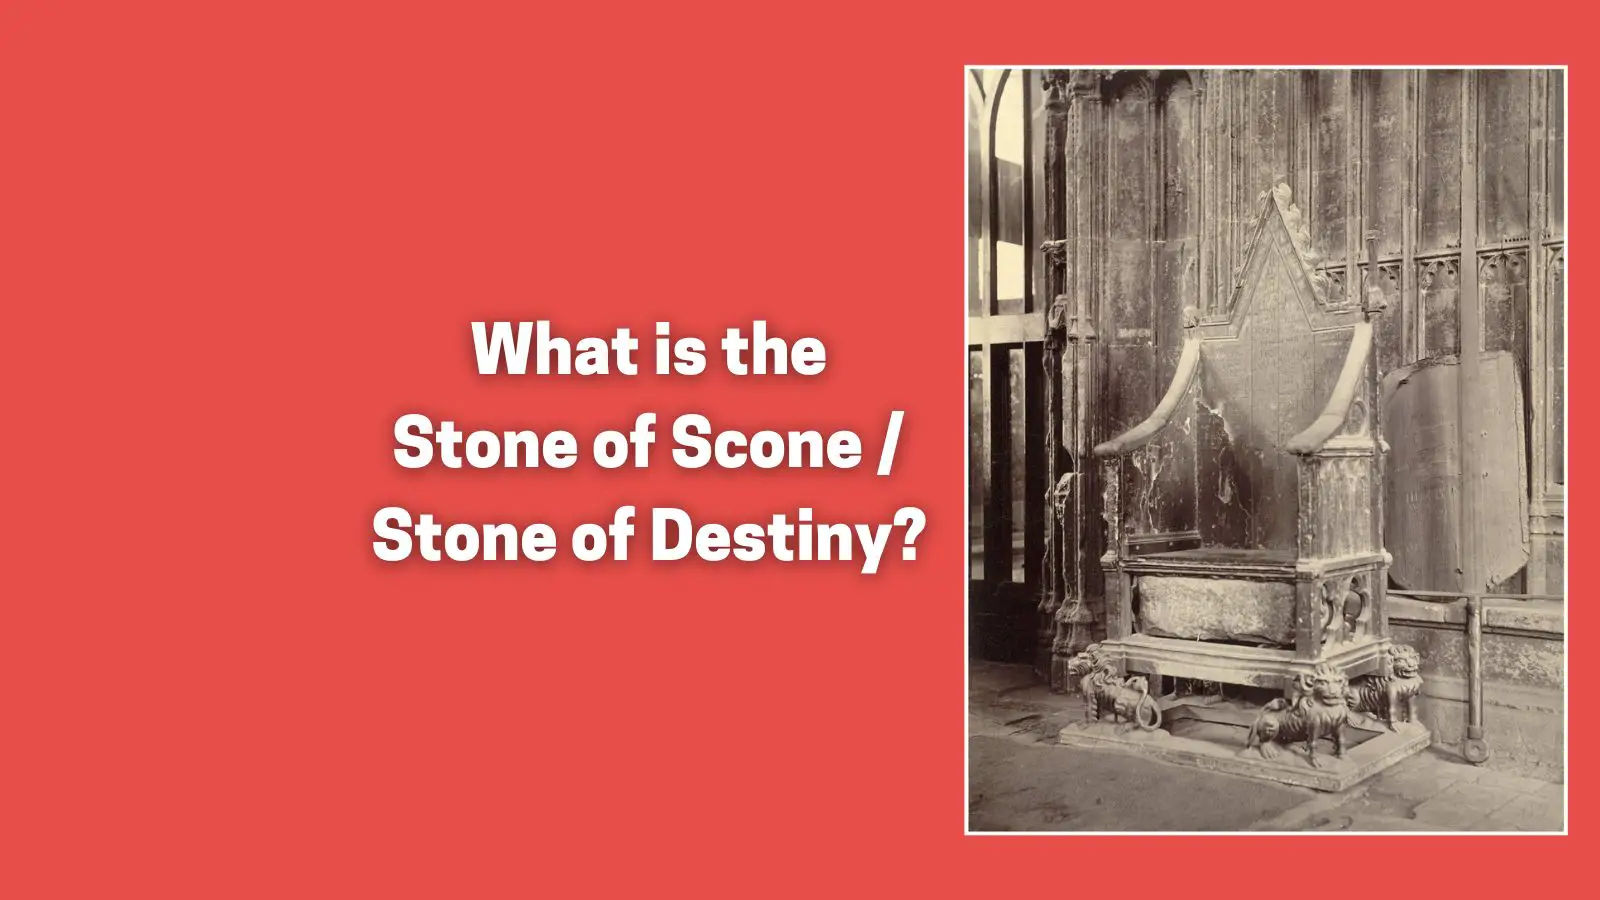 Stone of Scone